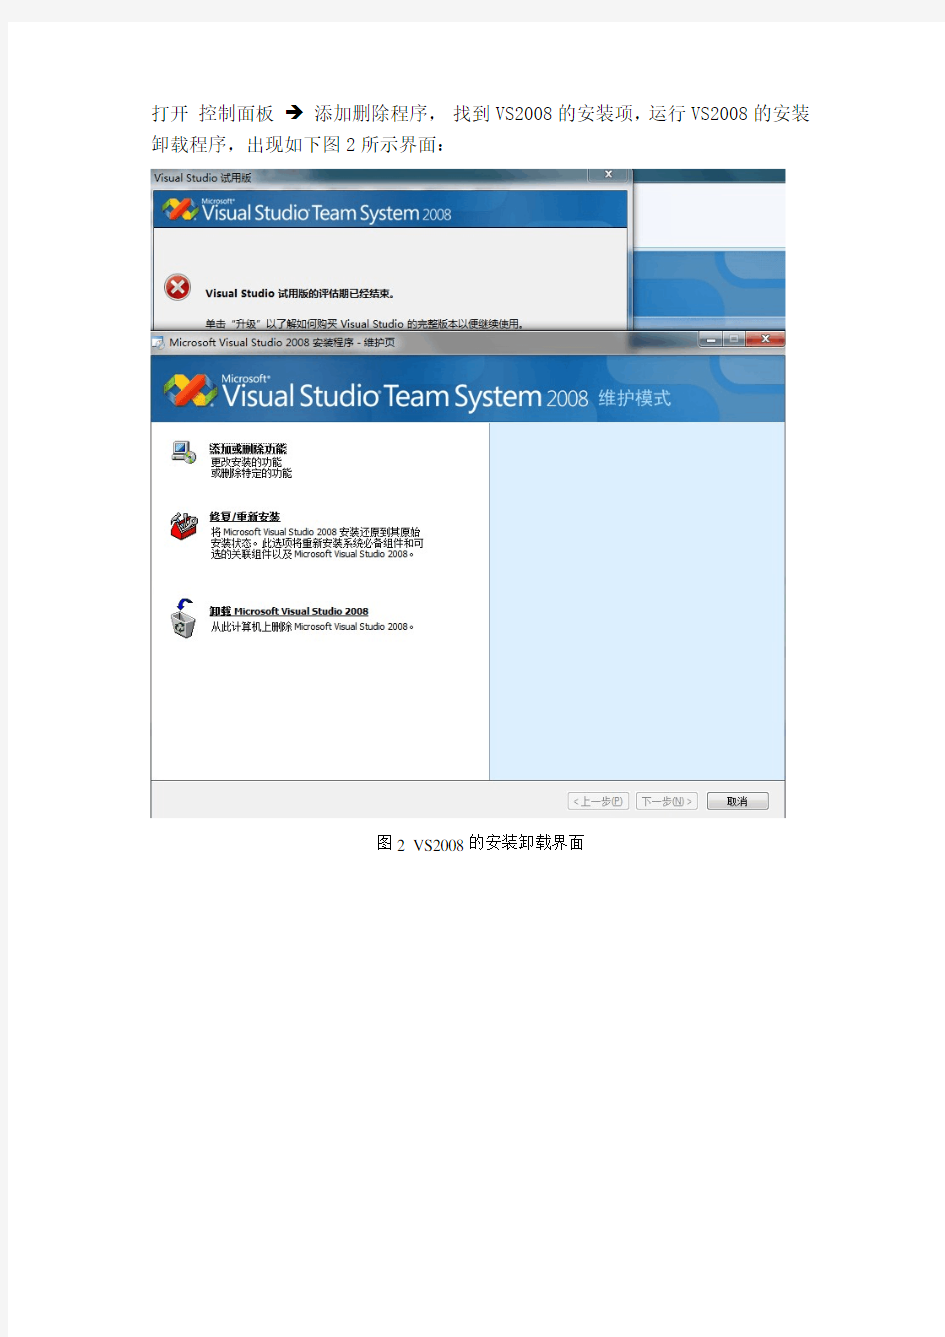 Windows 7 64bit +VS2008+ CUDA 4.0安装配置完全过程